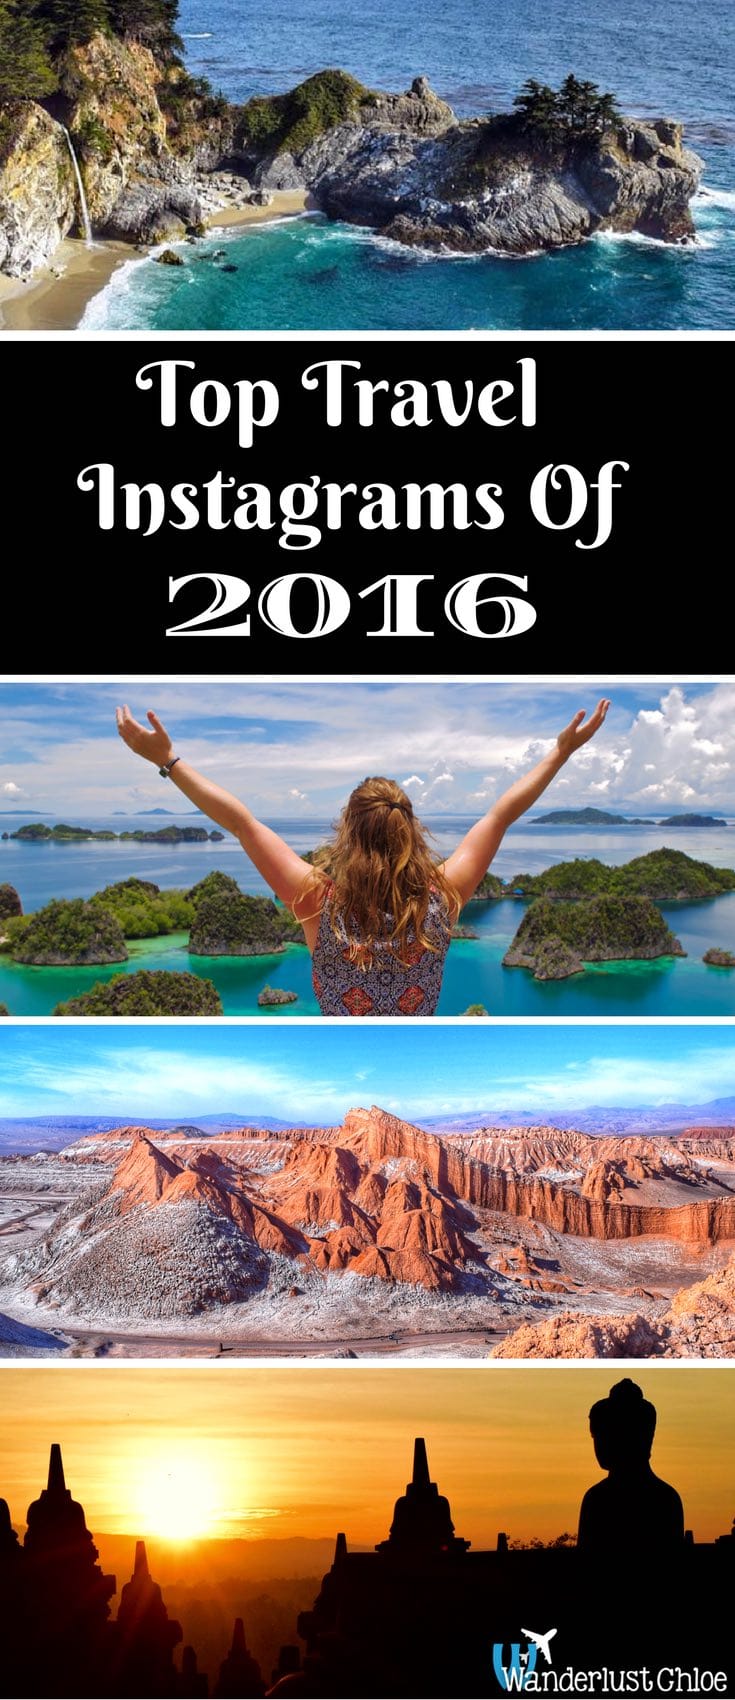 Top Travel Instagrams Of 2016